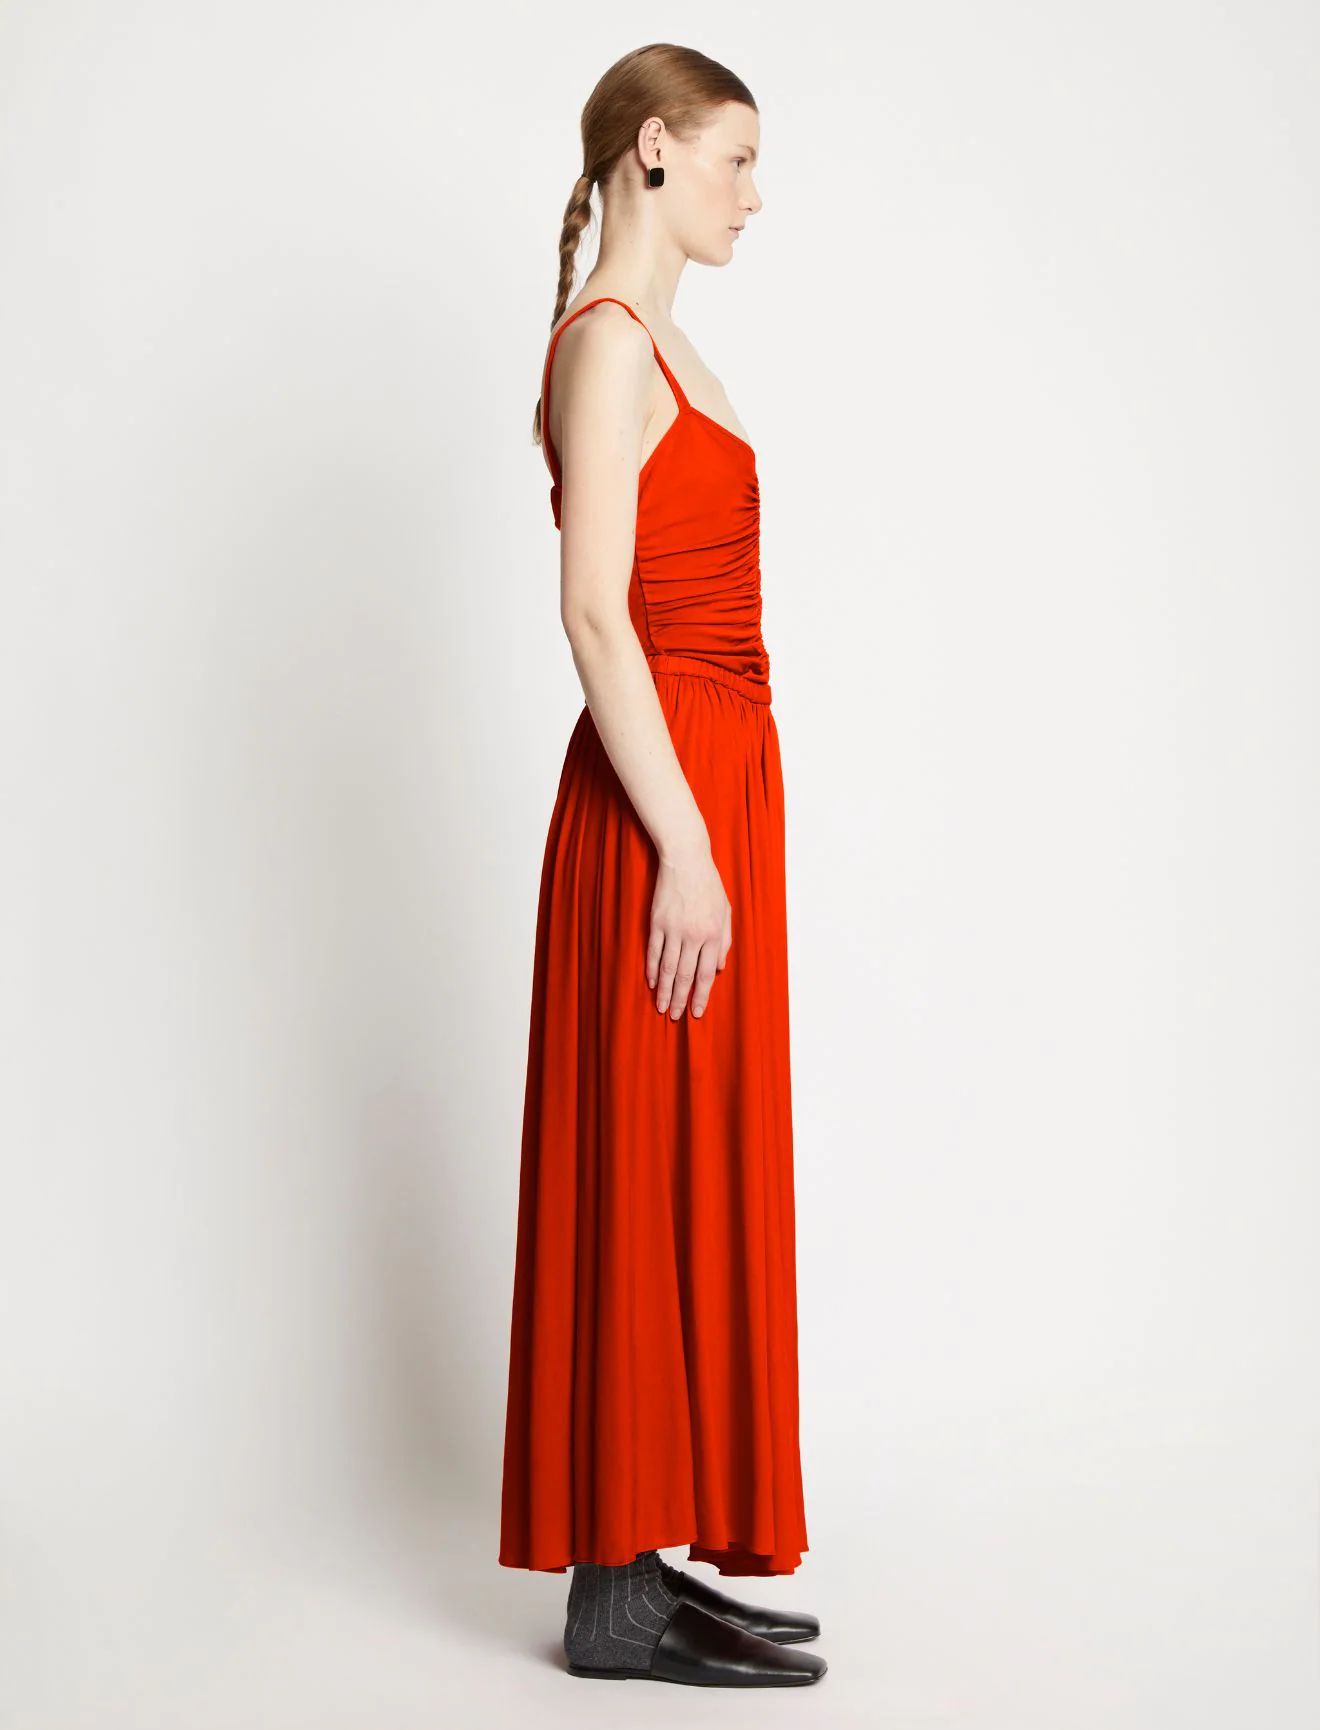 Matte Crepe Strap Dress in poppy | Proenza Schouler | Proenza Schouler LLC